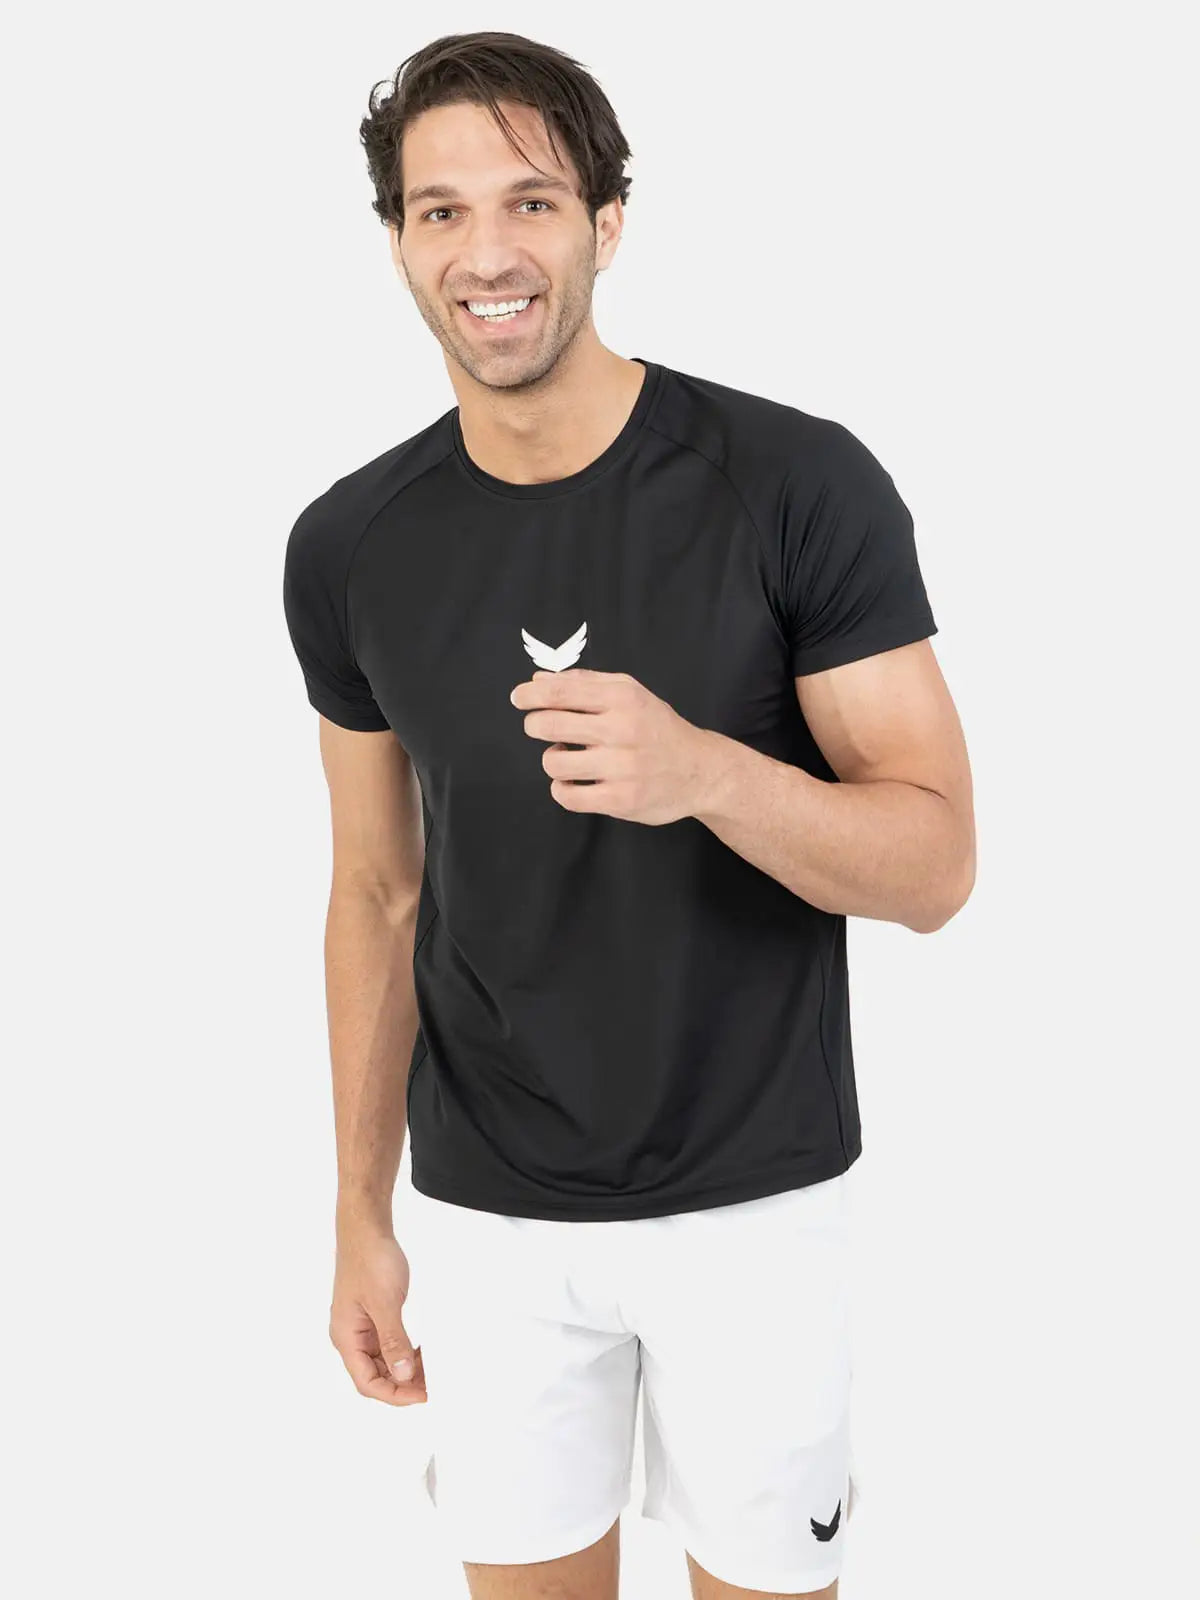 Dri-Fit Raglan Short Sleeve Training T-Shirt - Black